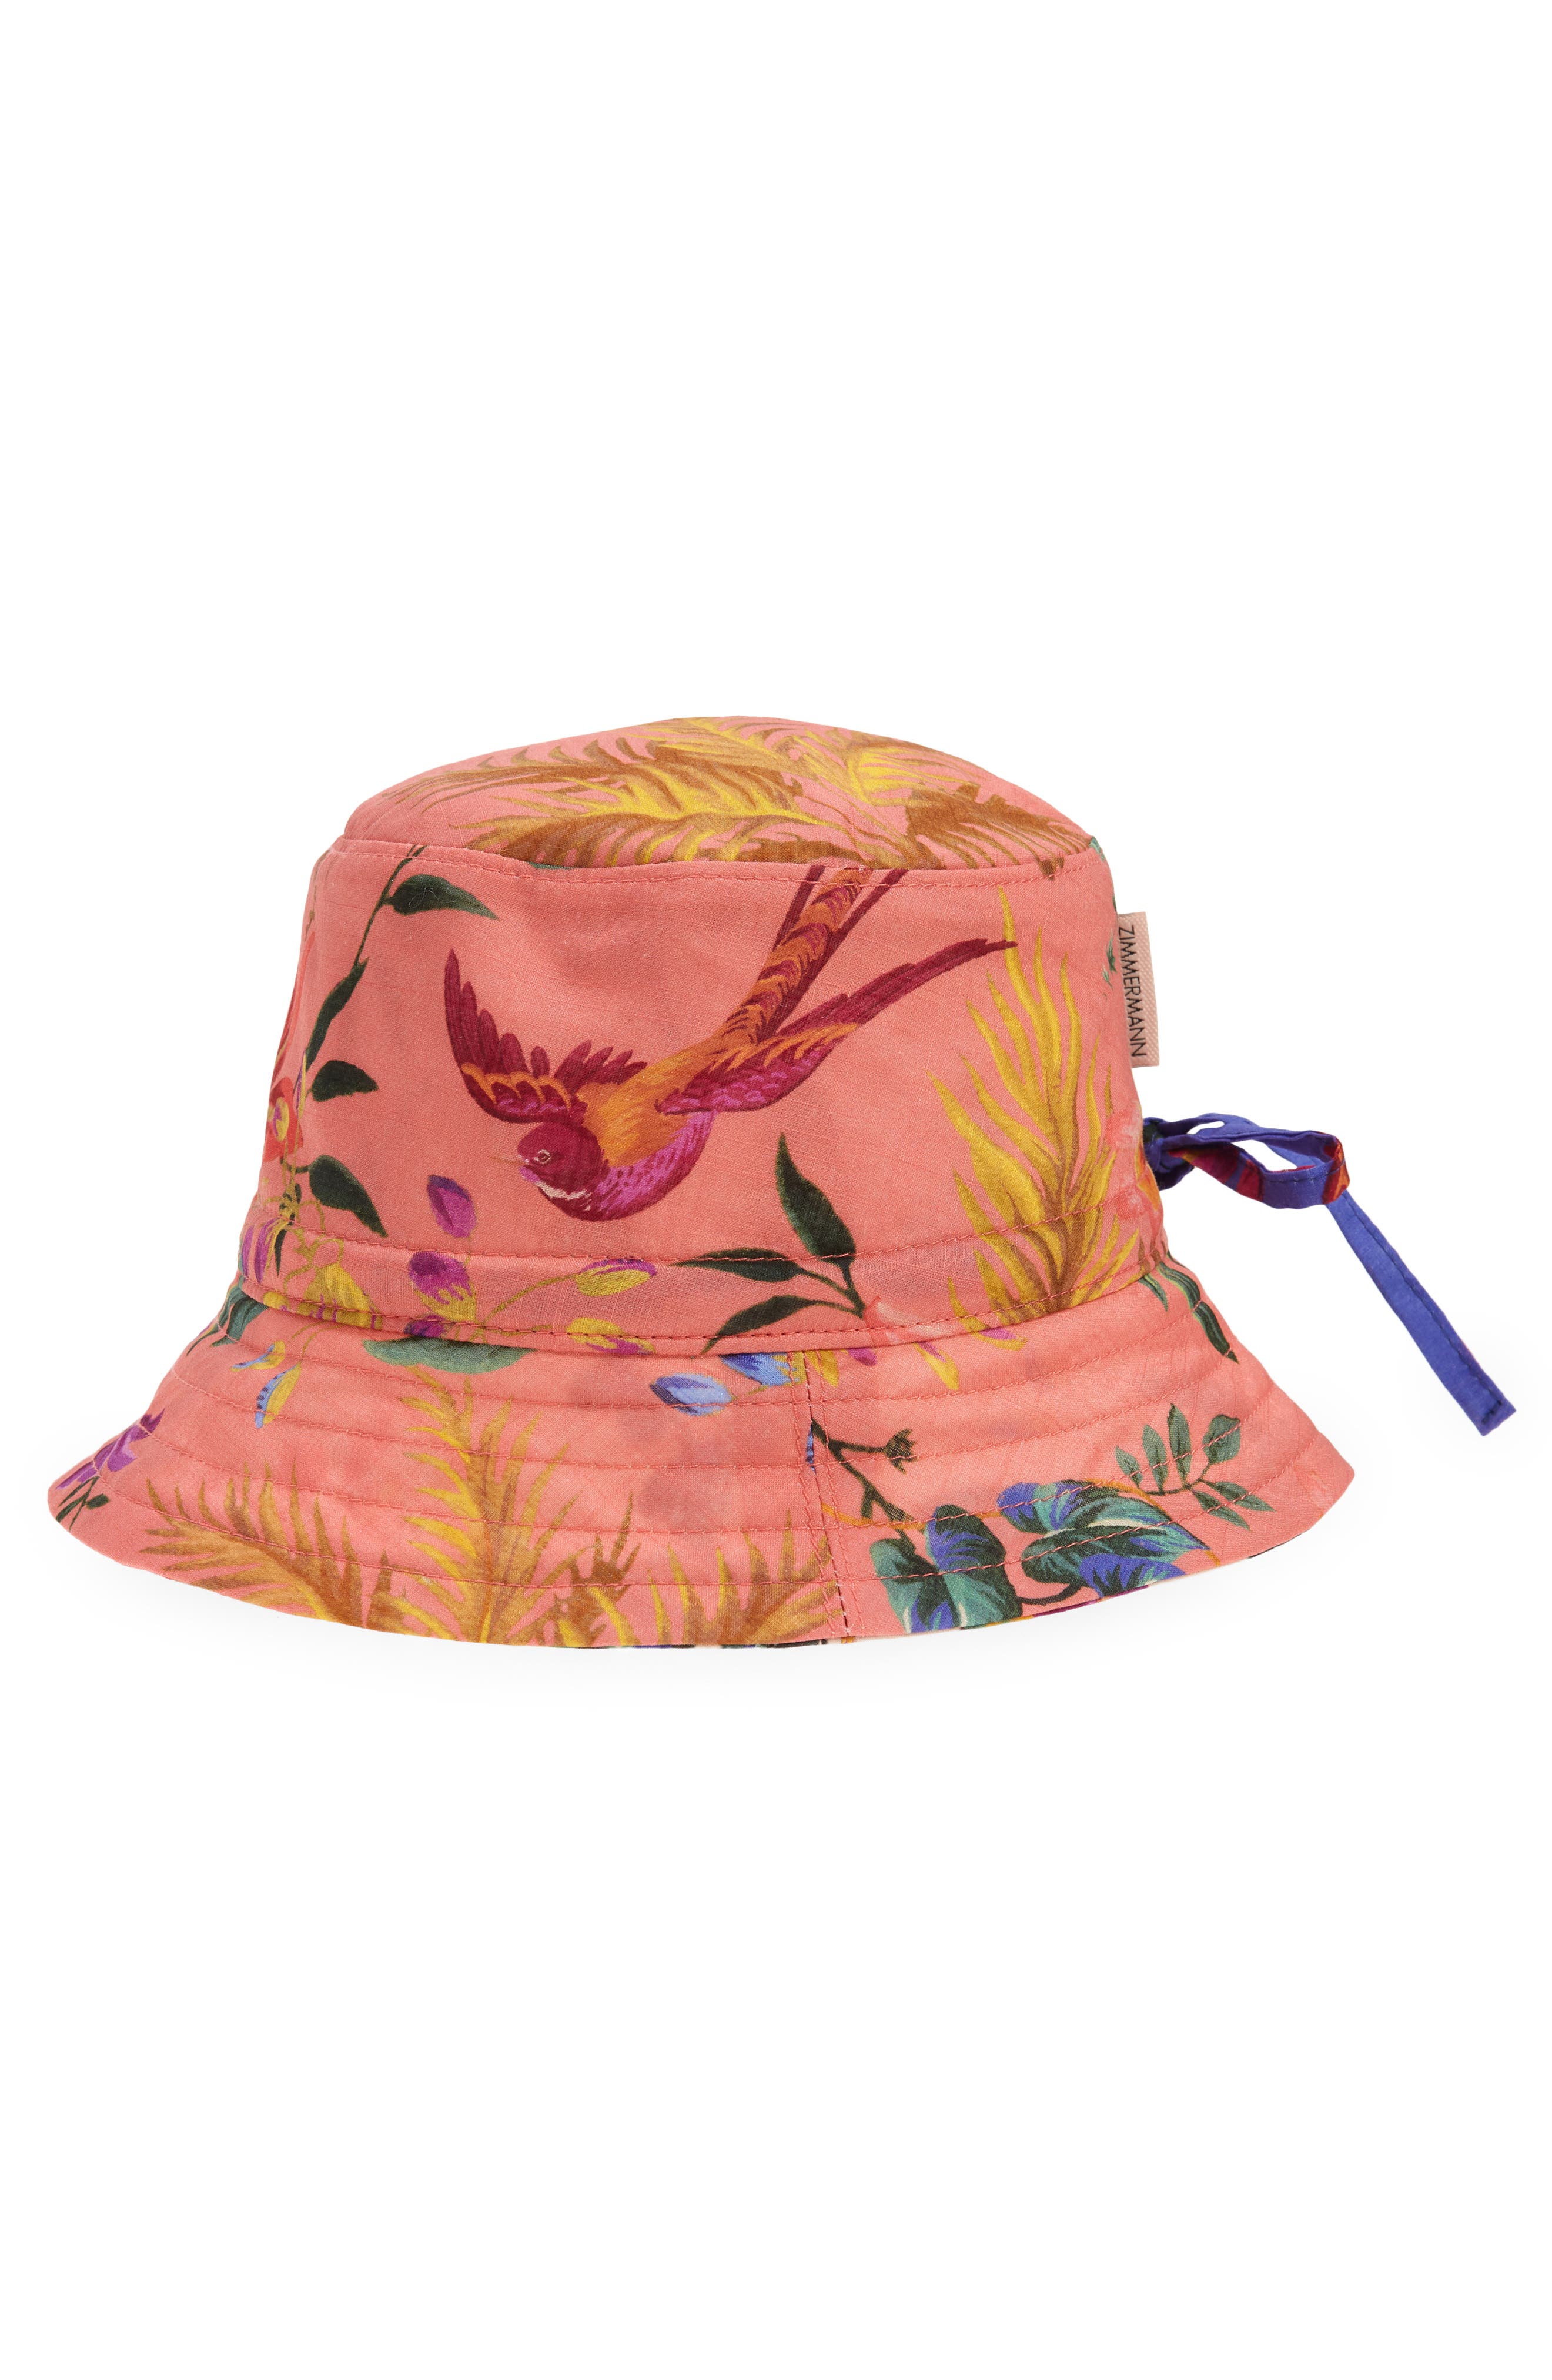 Zimmermann Kids' Floral Cotton Bucket Hat in Coral Floral at Nordstrom